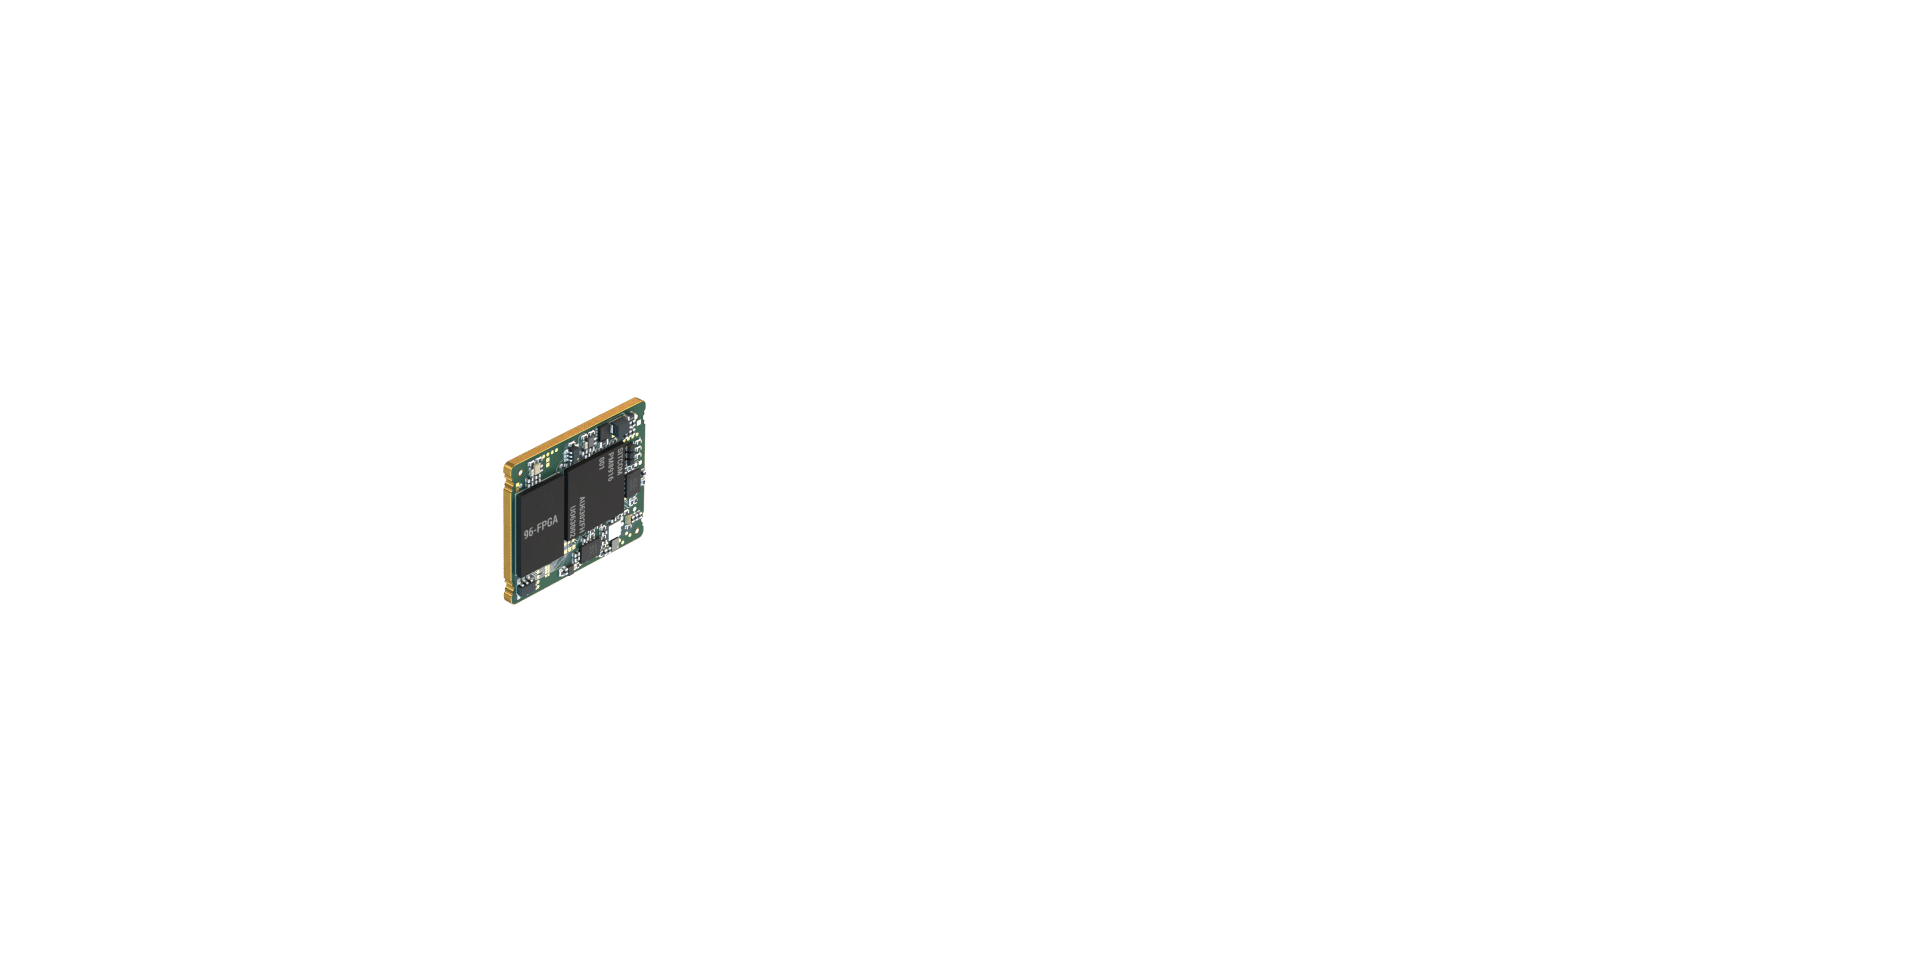 FPGA accelerator integrated in barcode scanner for logistics